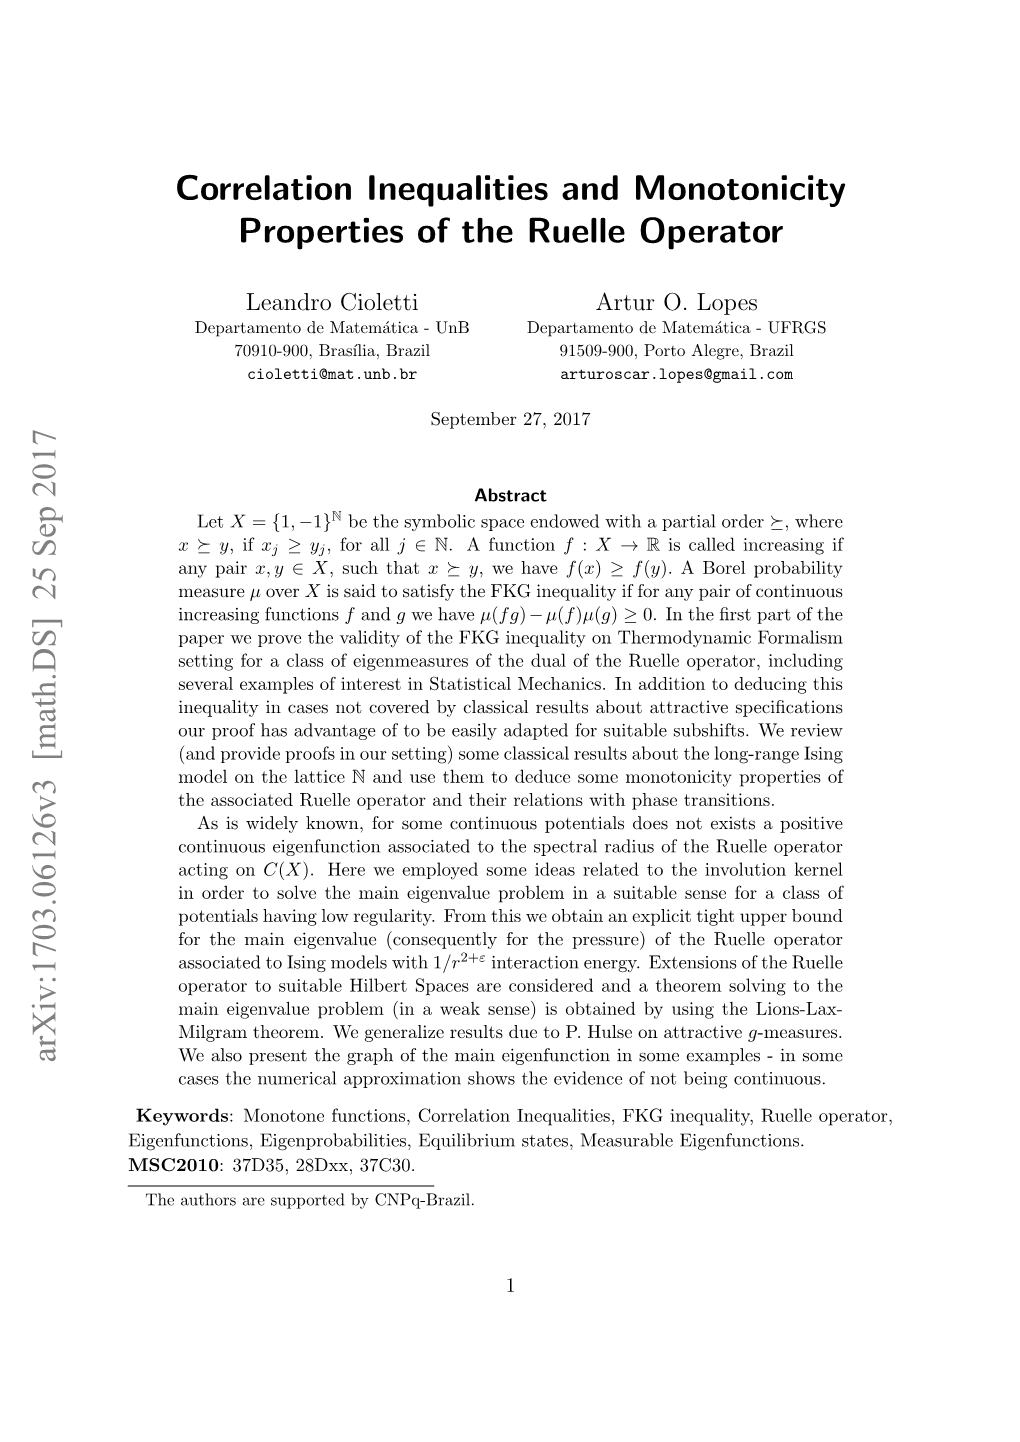 Correlation Inequalities and Monotonicity Properties of the Ruelle Operator